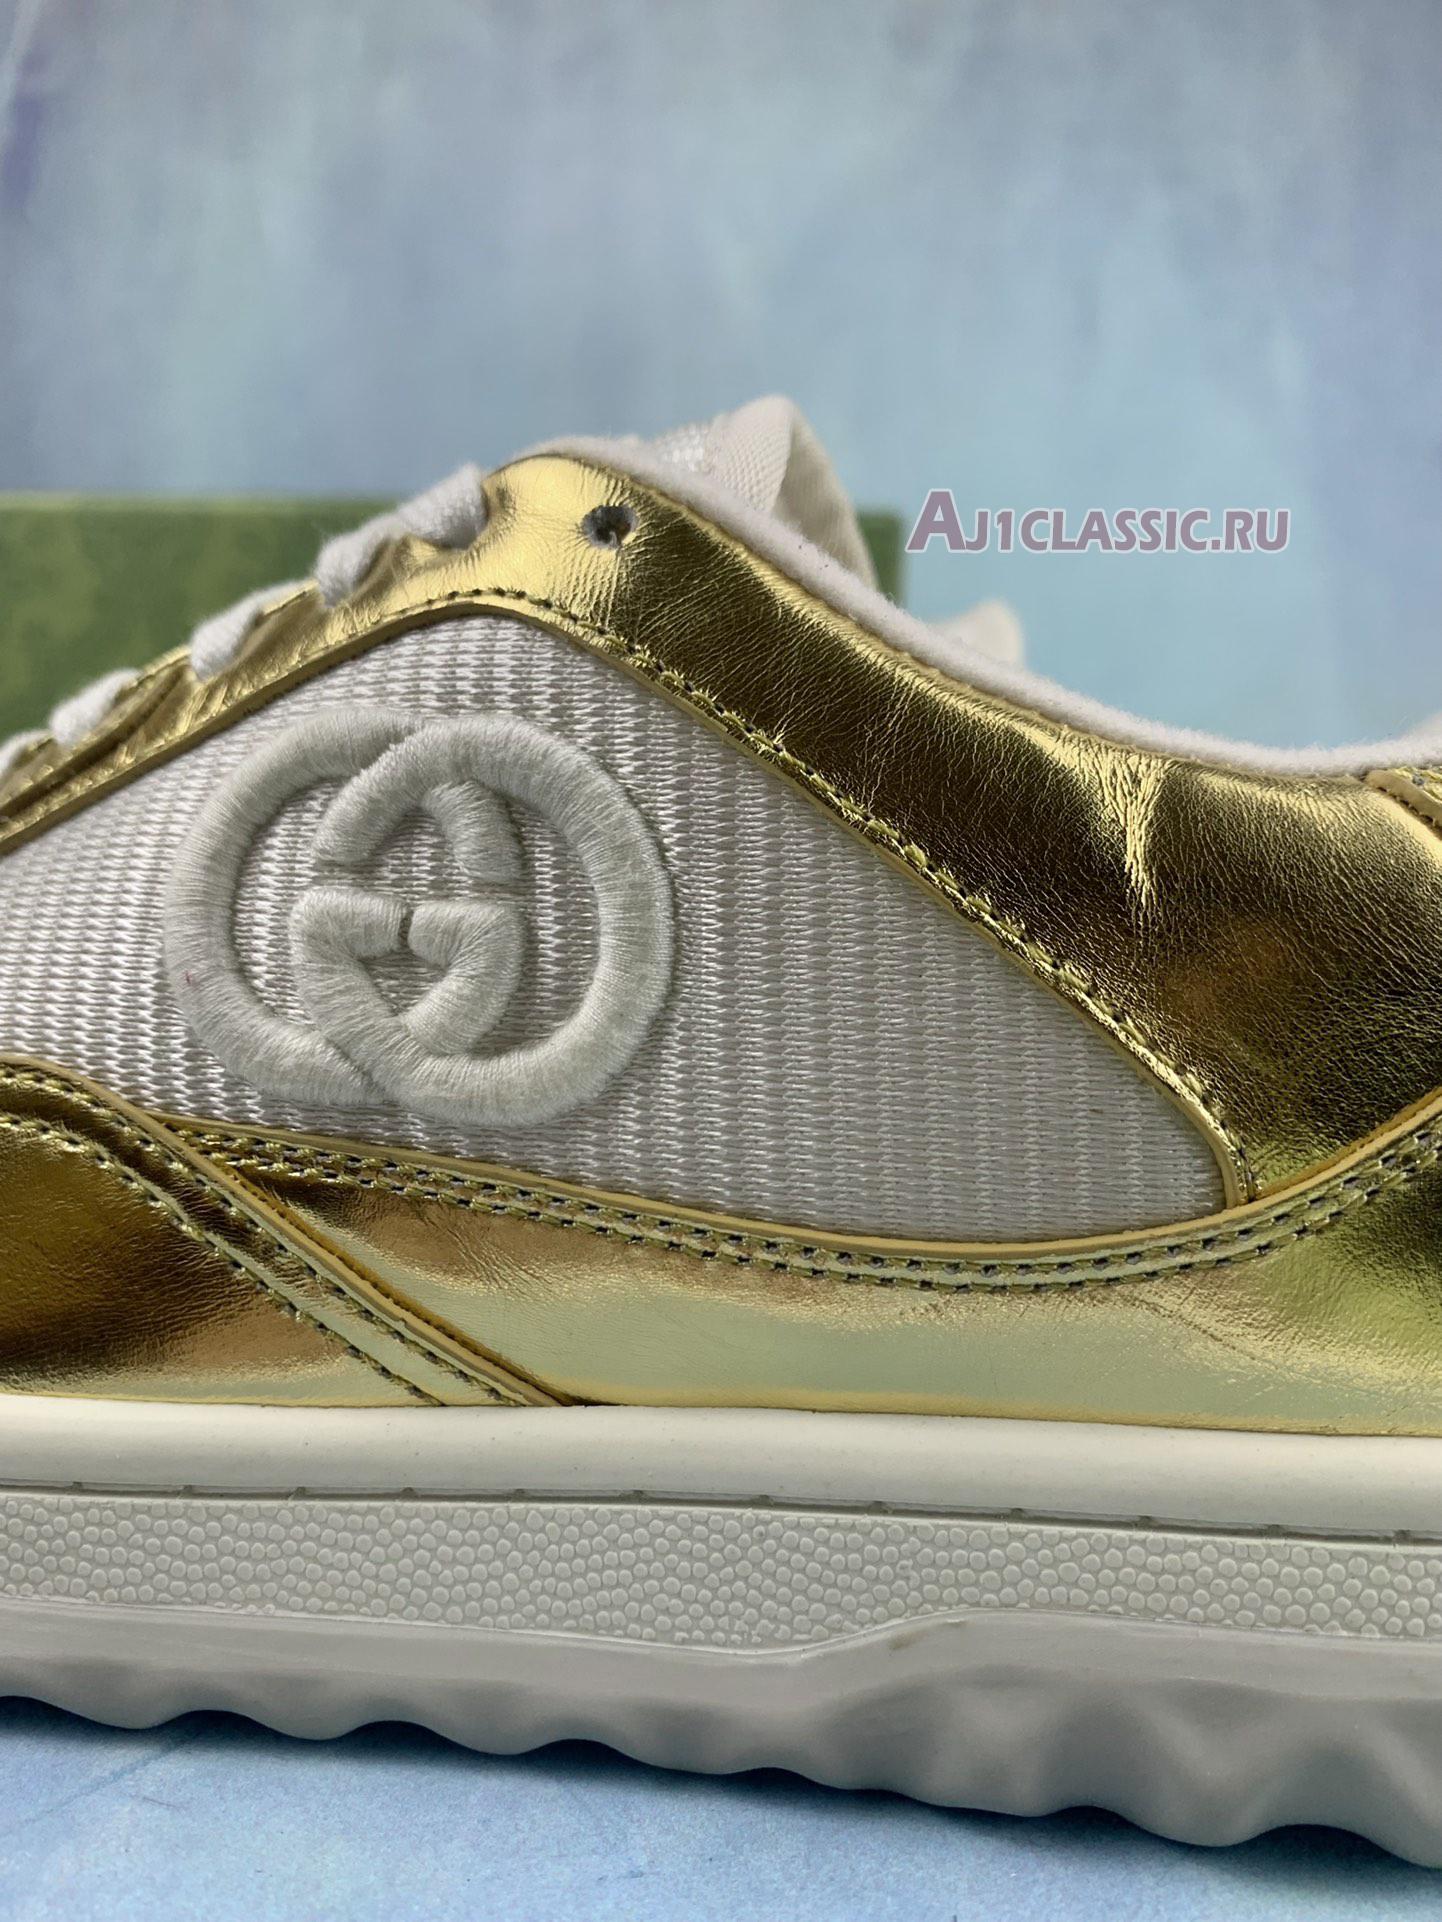 Gucci MAC80 Sneaker "Gold" 750834 AACA9 8044